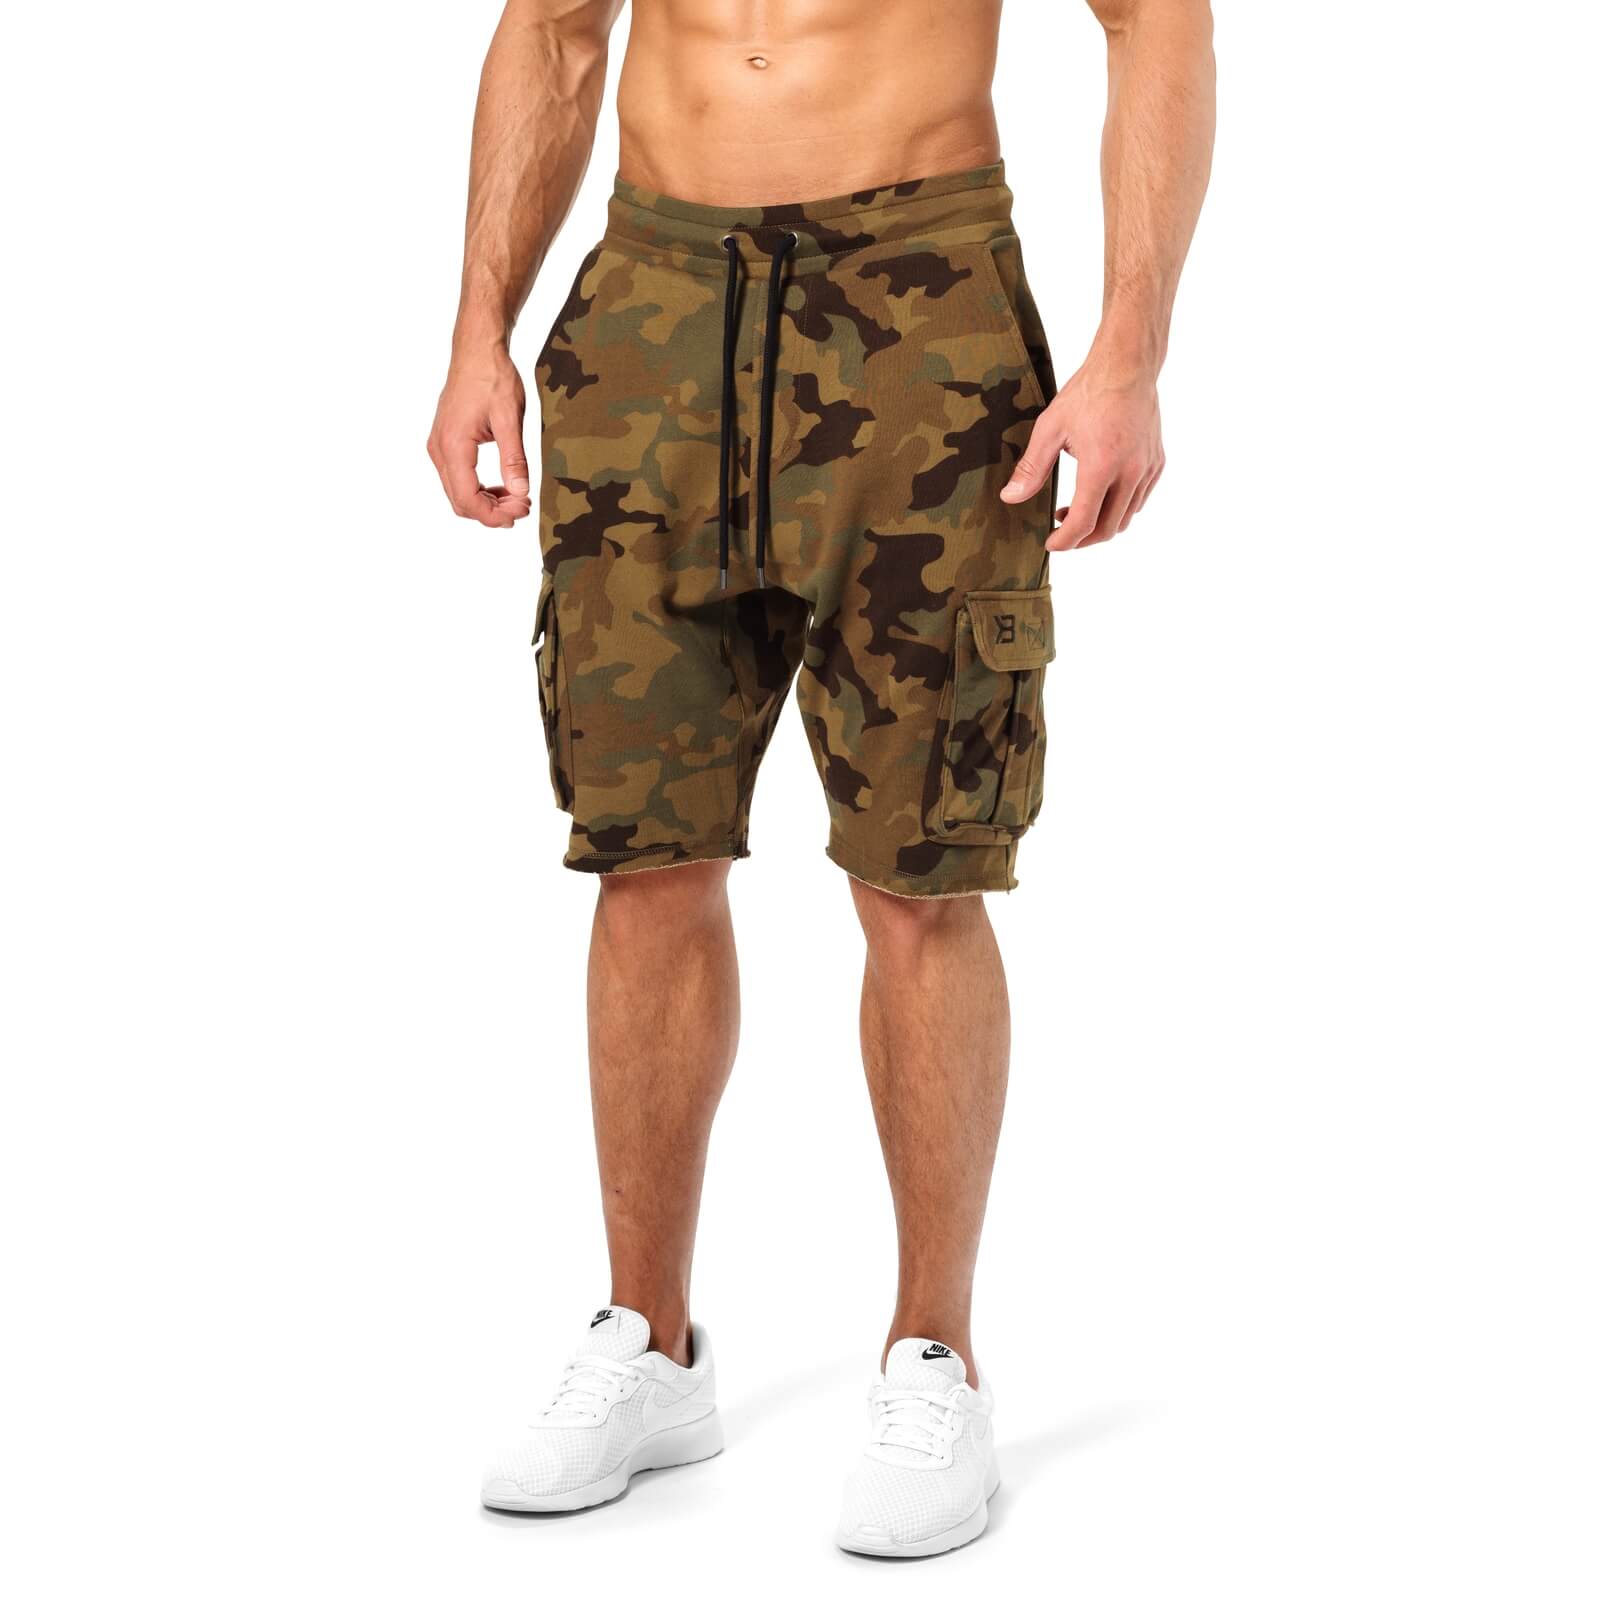 Sjekke Bronx Cargo Shorts, military camo, Better Bodies hos SportGymButikken.no